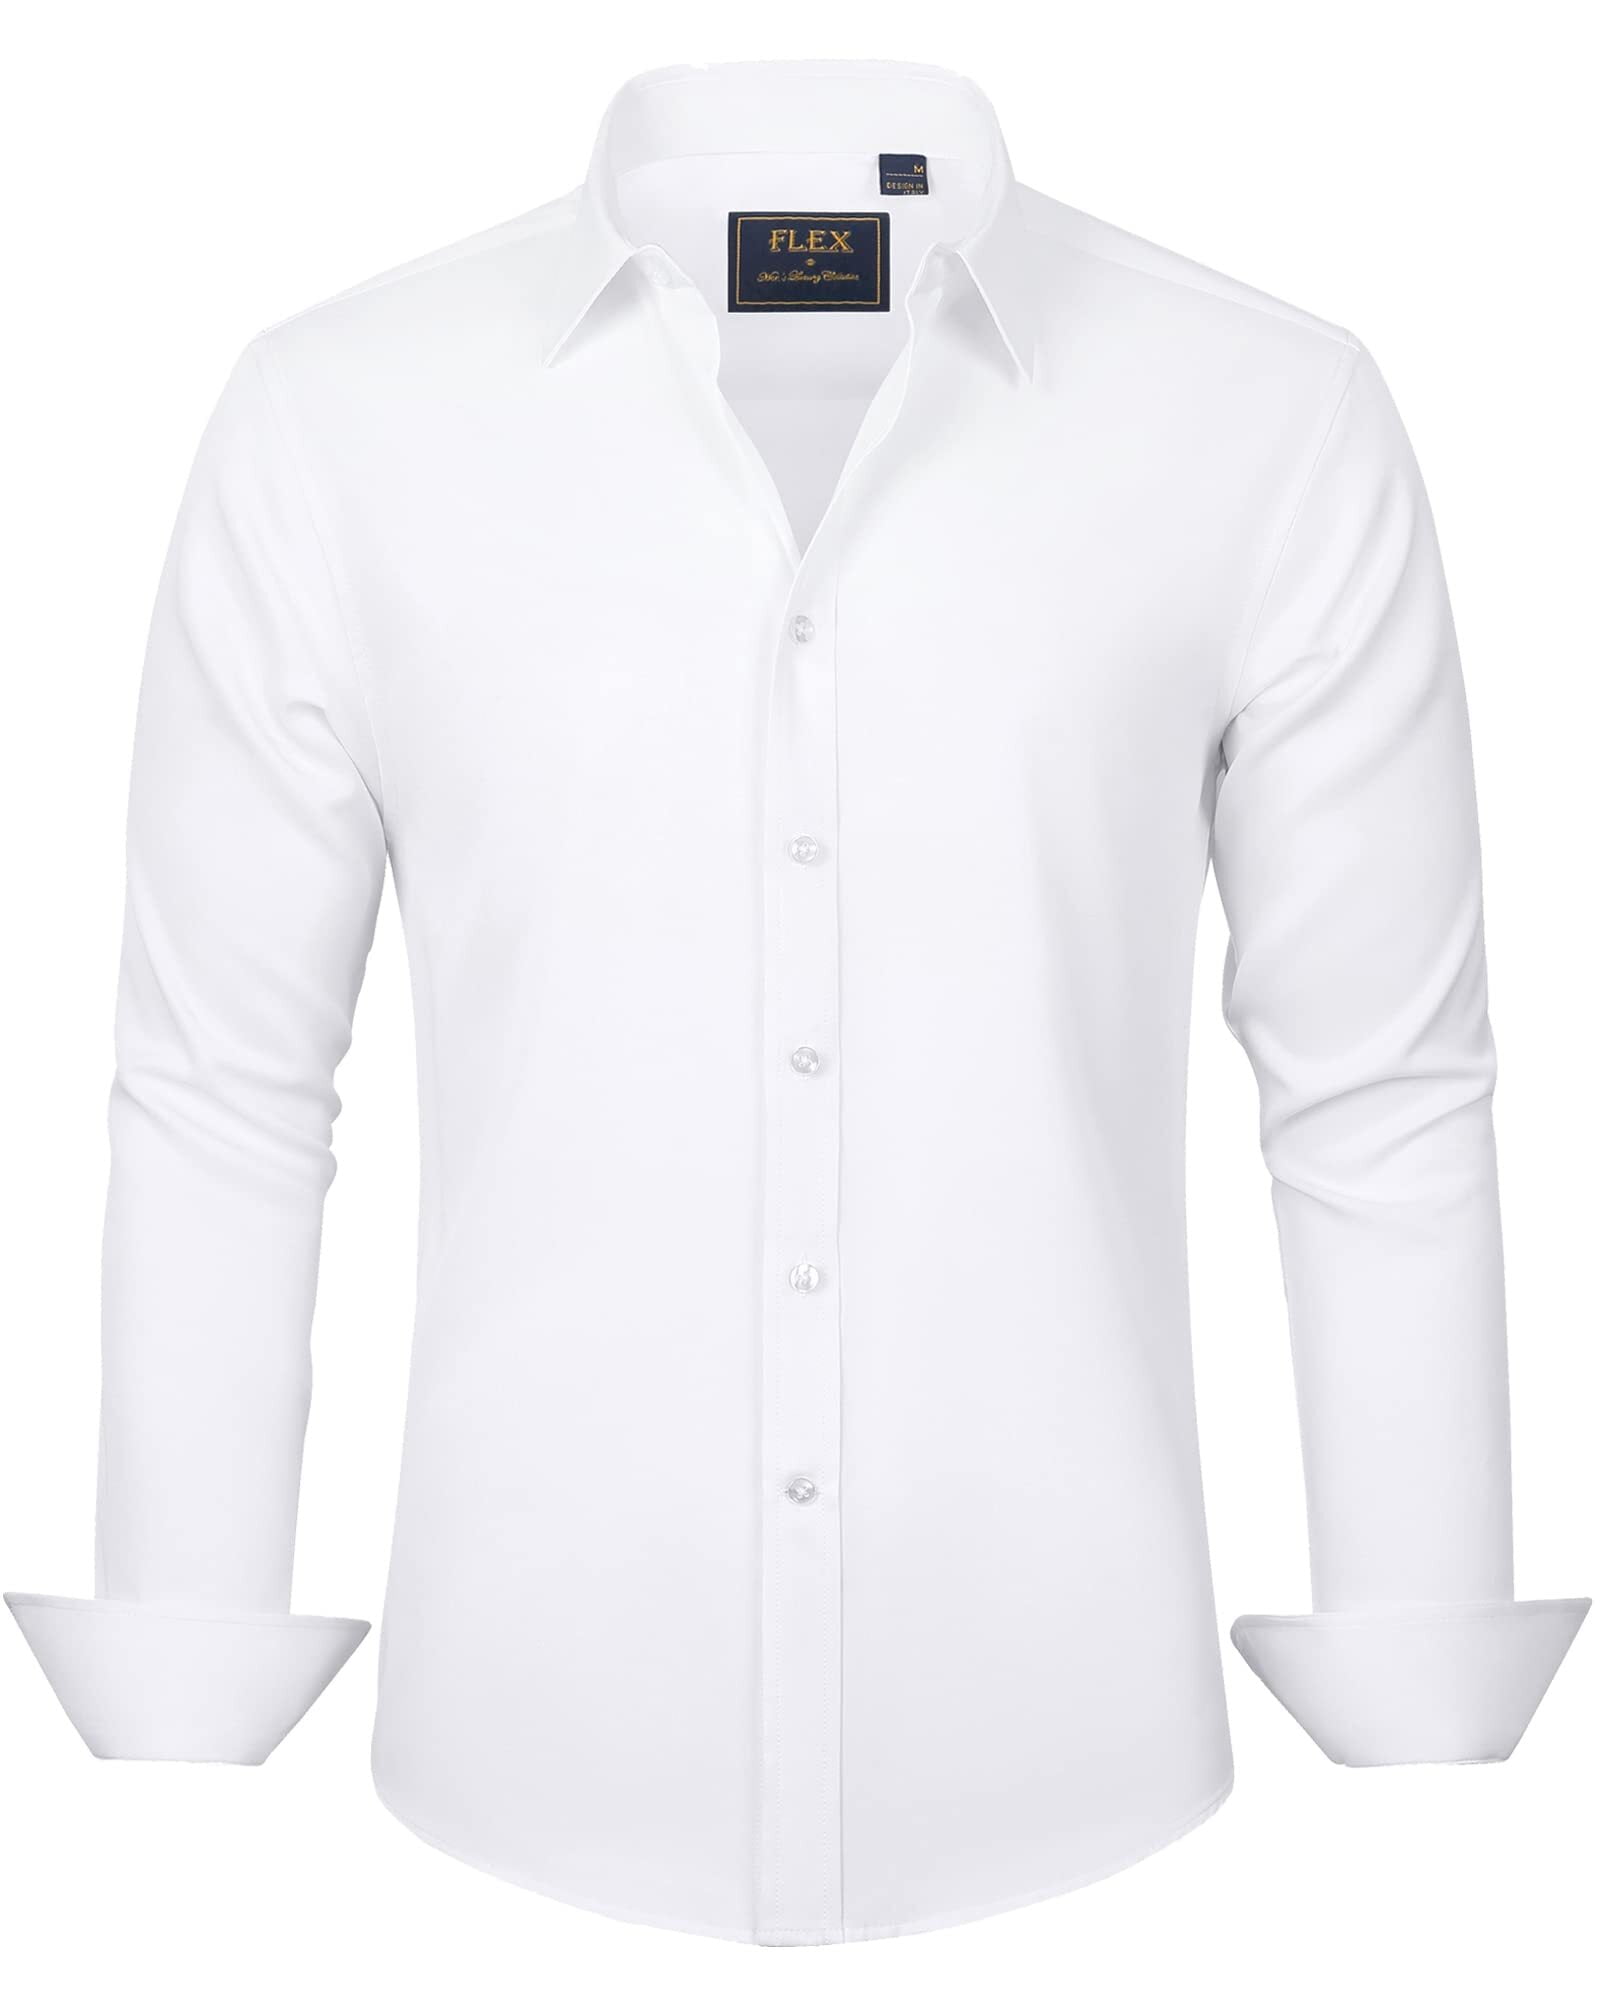 Men's Wrinkle-Resistant Button Down Shirt